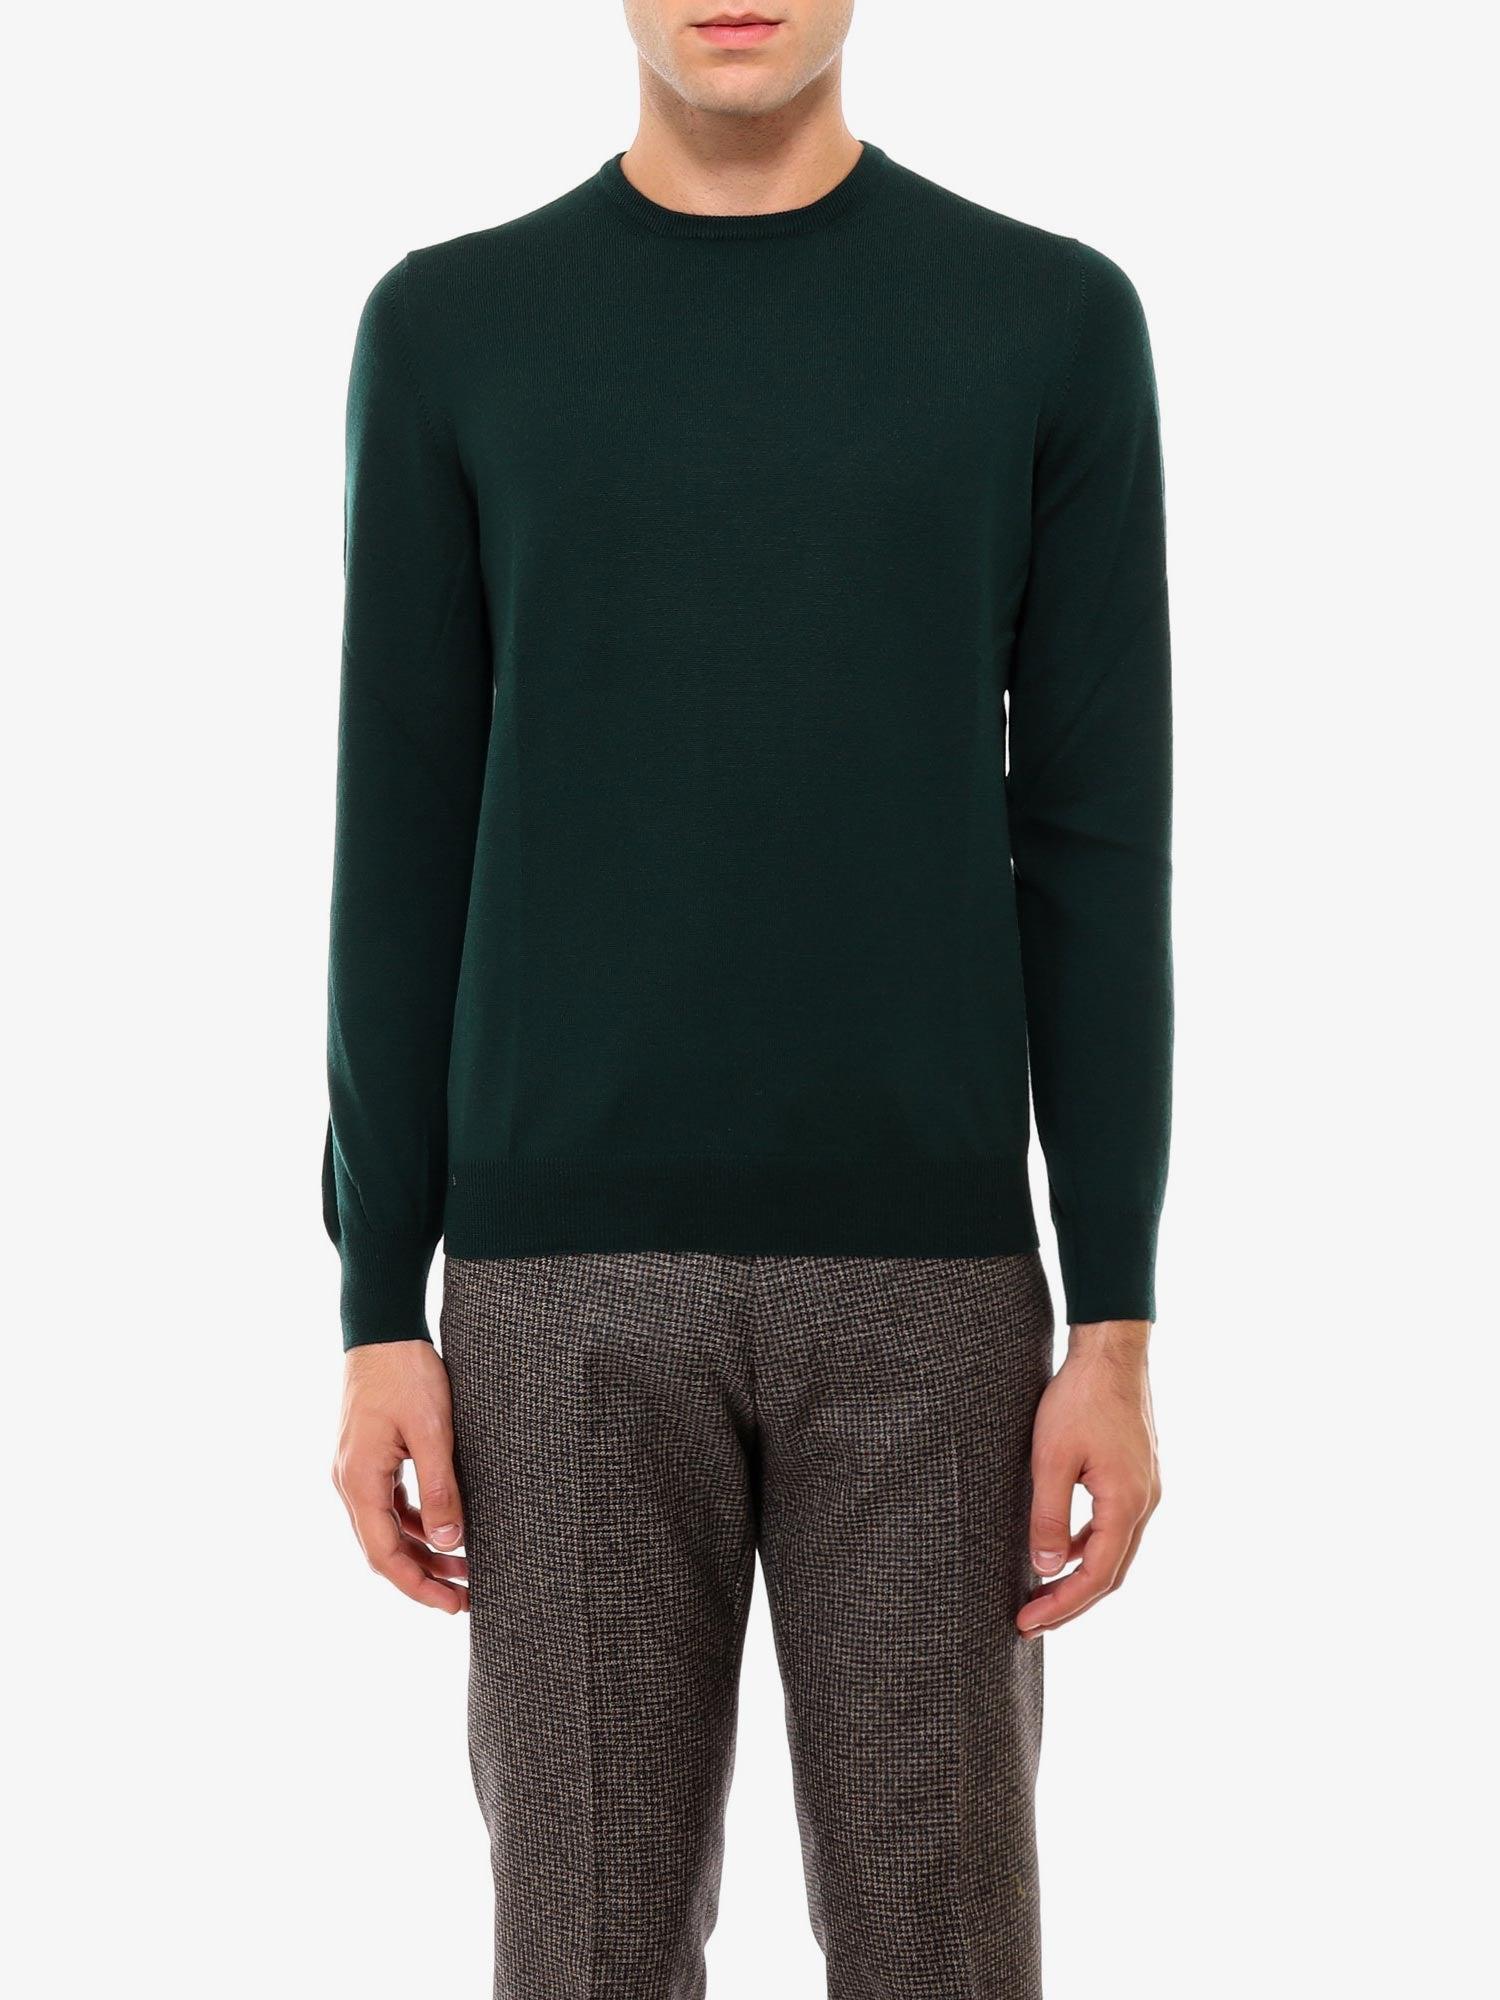 NUGNES 1920 Wool Sweater in Green for Men | Lyst